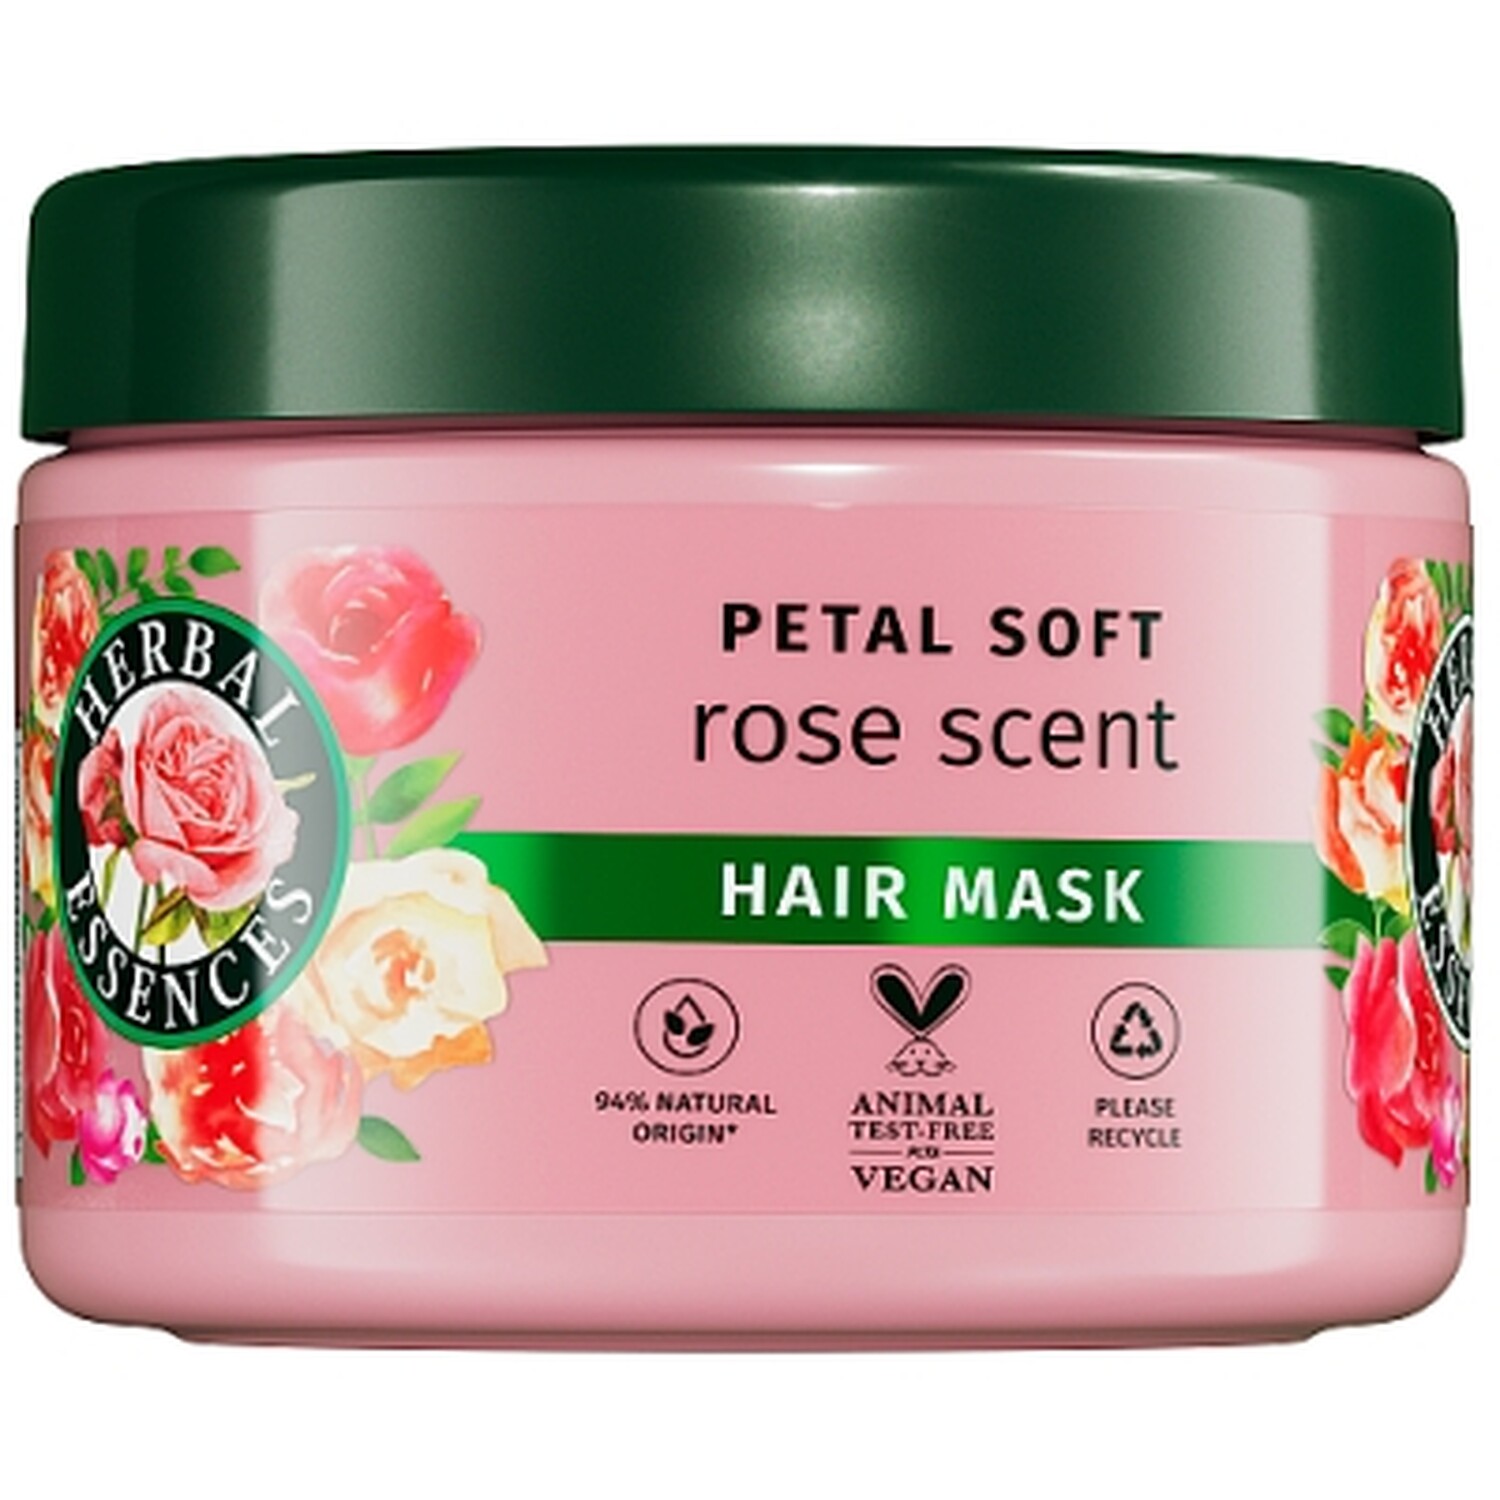 Herbal Essences Petal Soft Rose Hair Mask 300ml - Pink Image